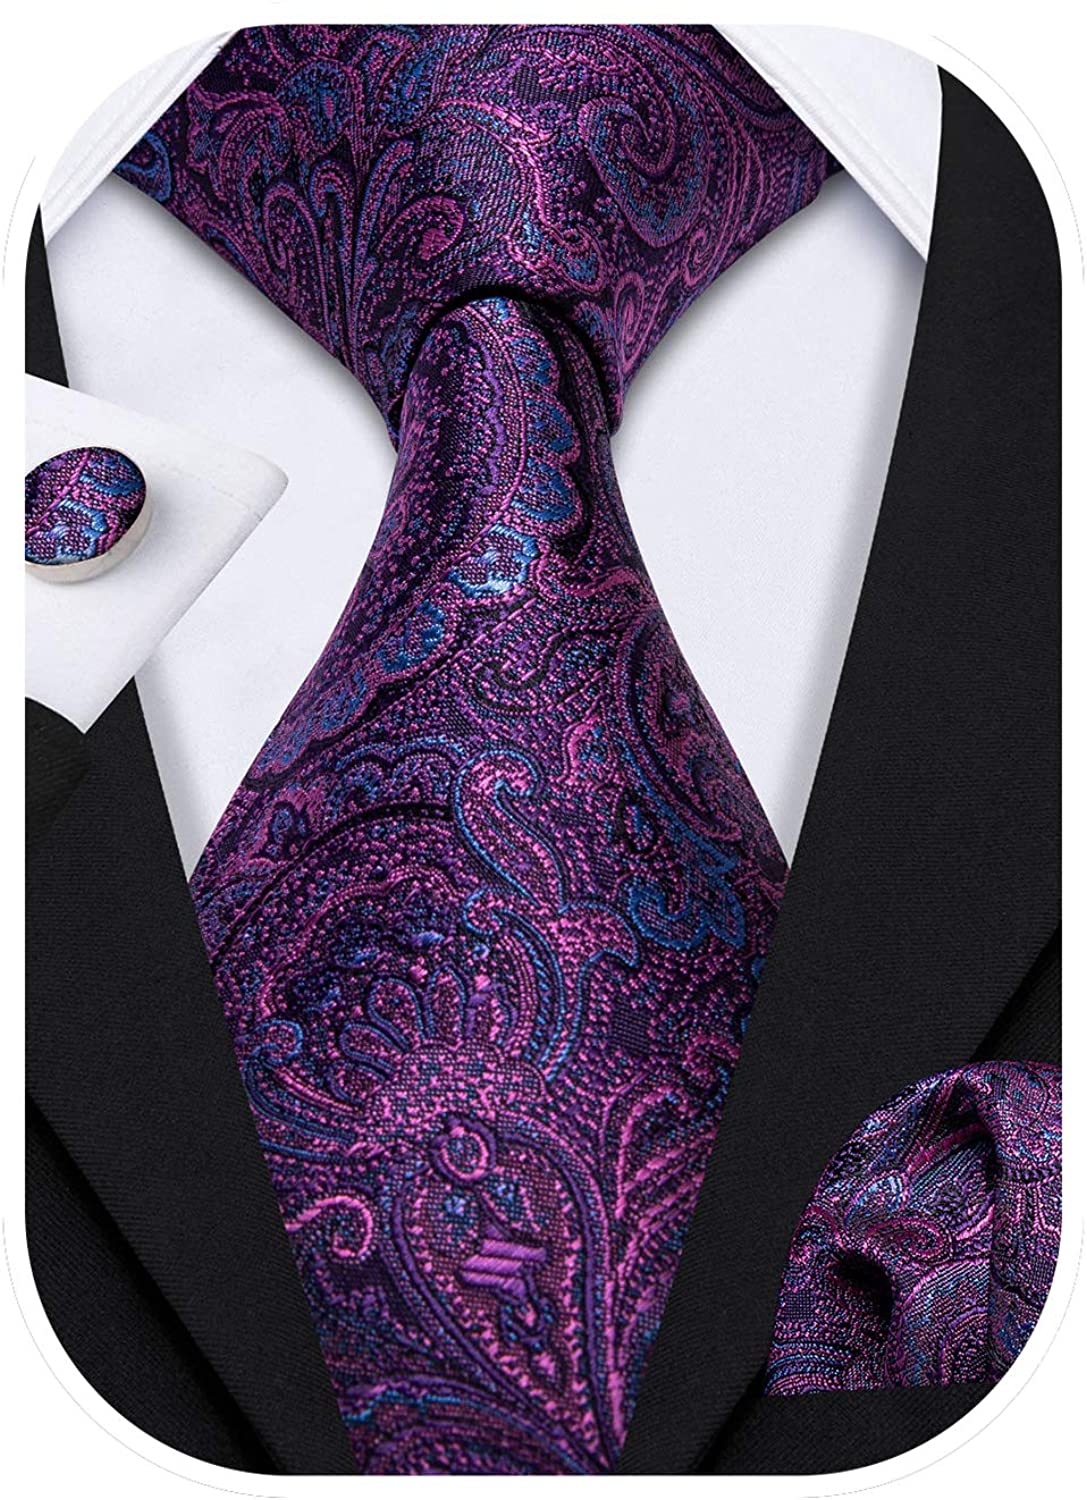 Barry.Wang Paisley Tie Fashion Set Hanky Cufflinks Neckties for Men Woven  Silk | eBay